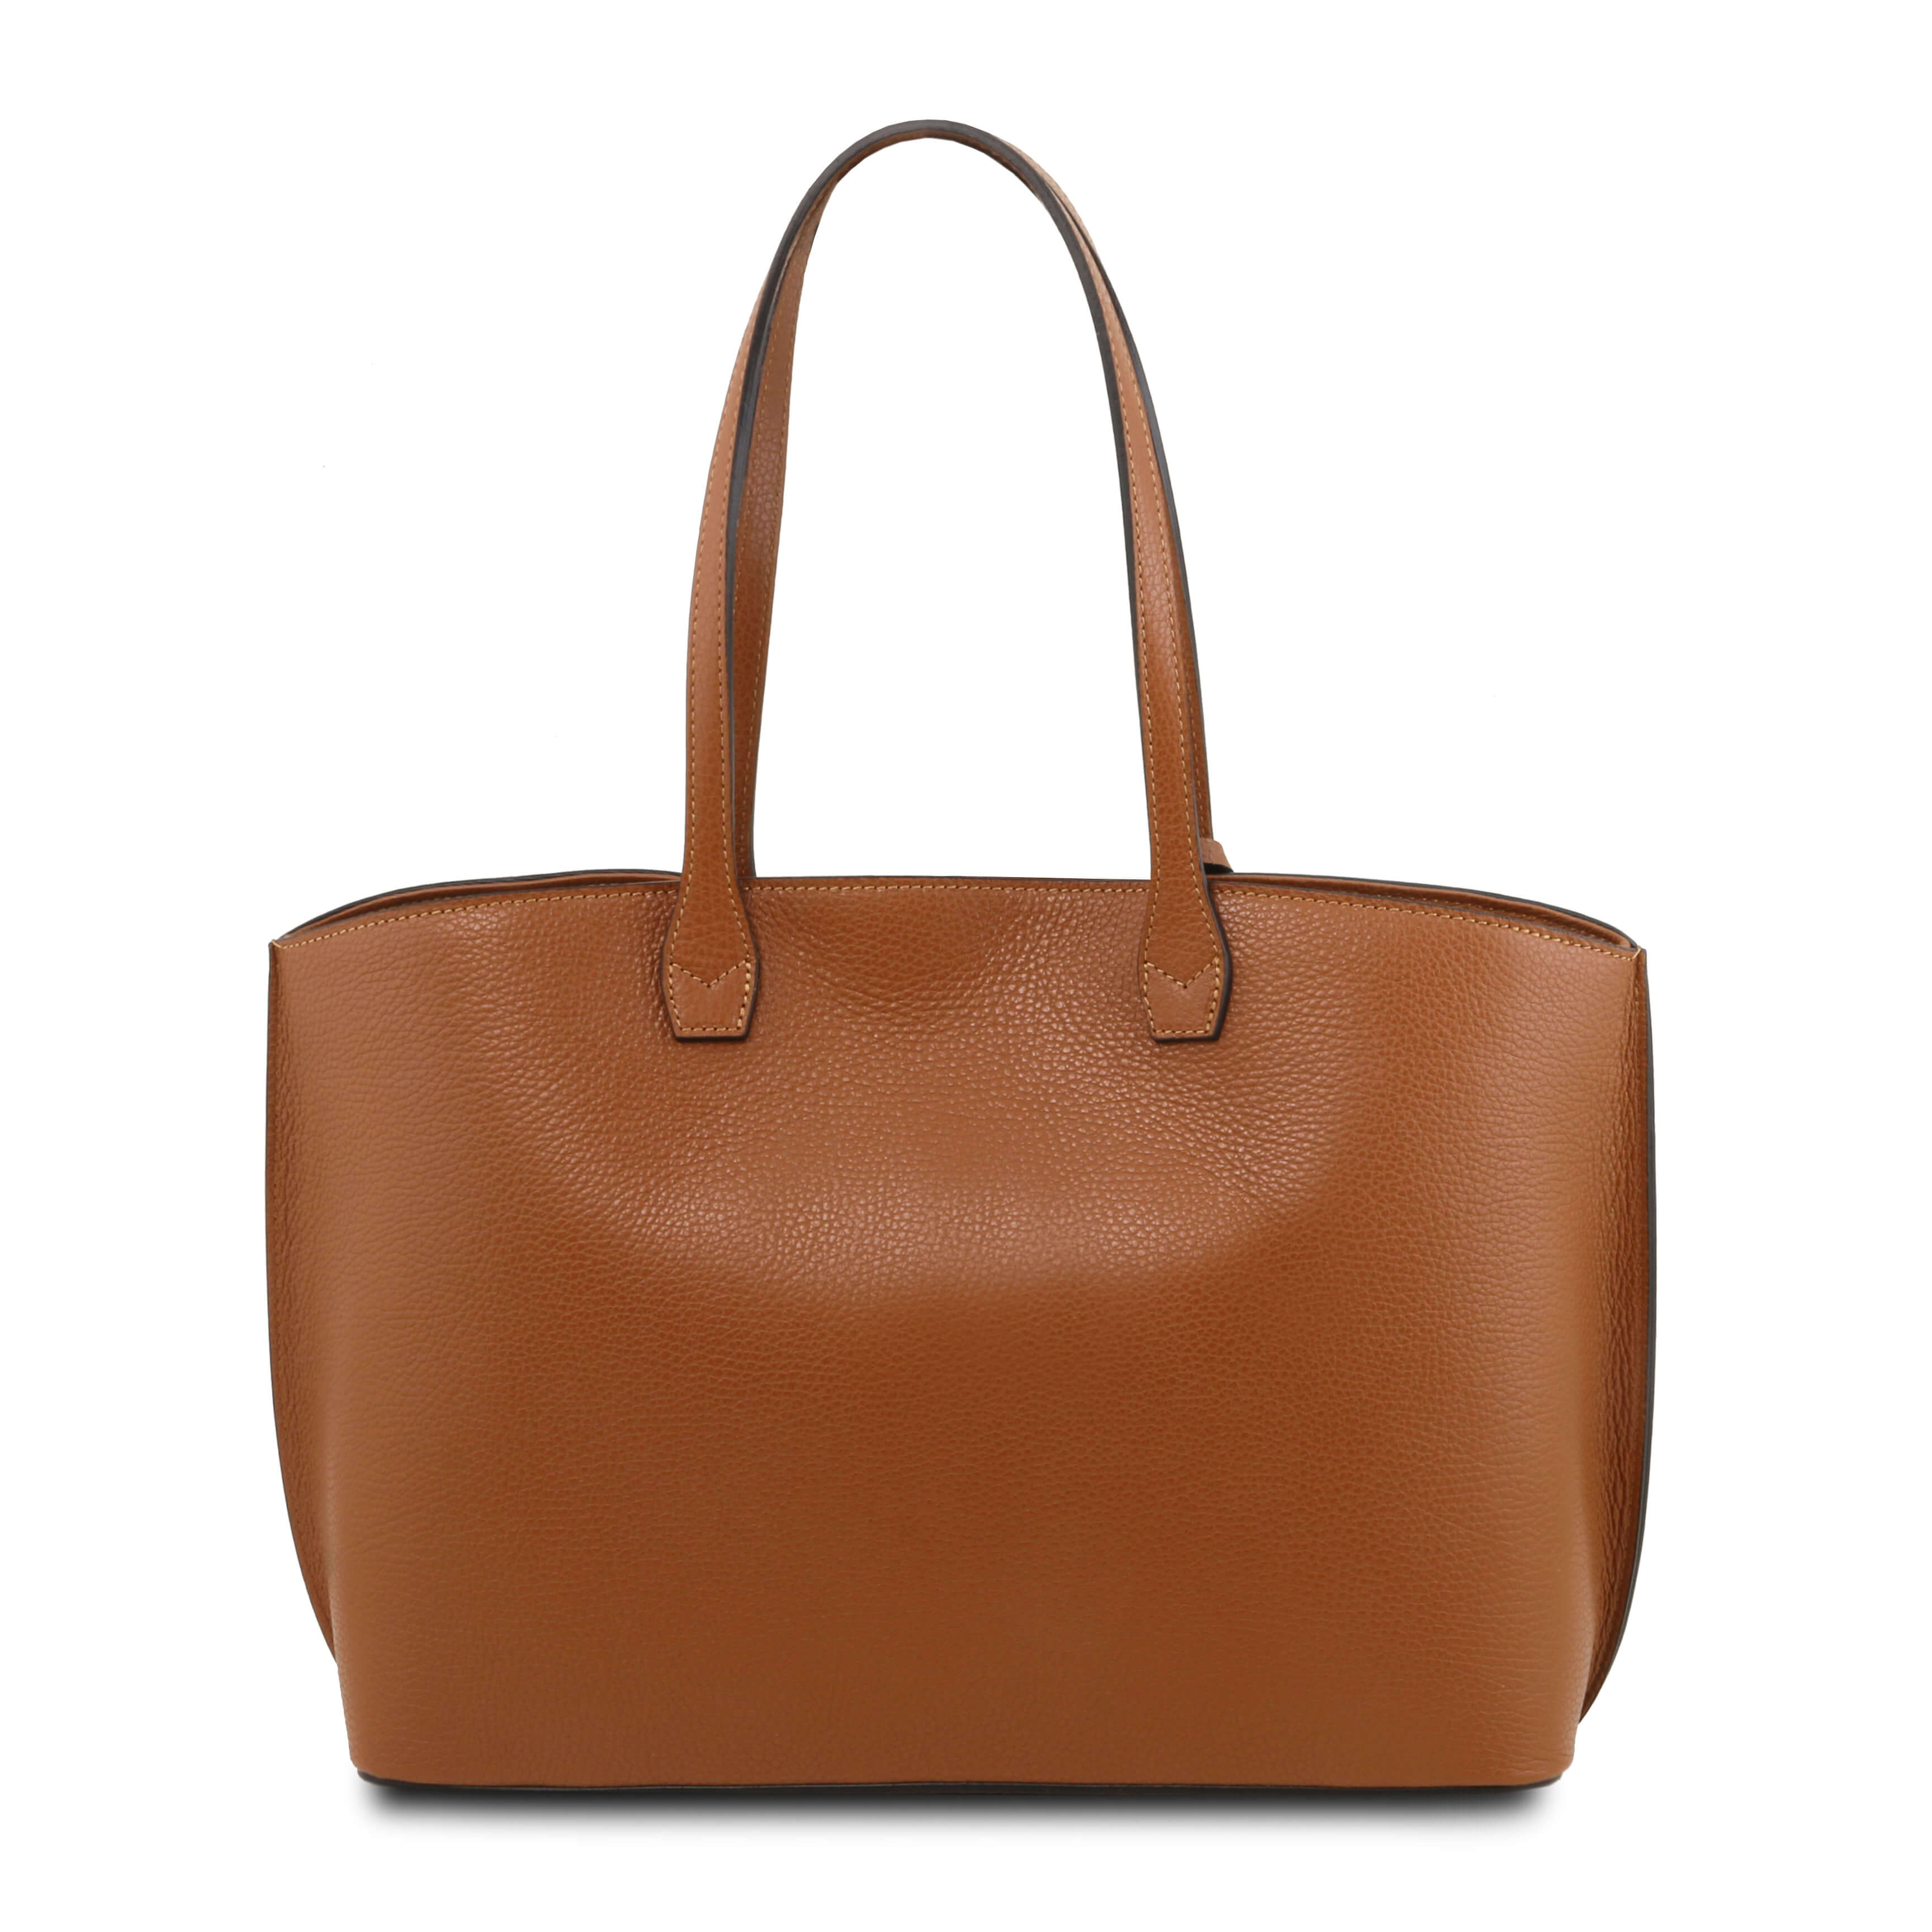 Tuscany Leather leren shopper TL BAG voor dames tl141828 cognac achterkant